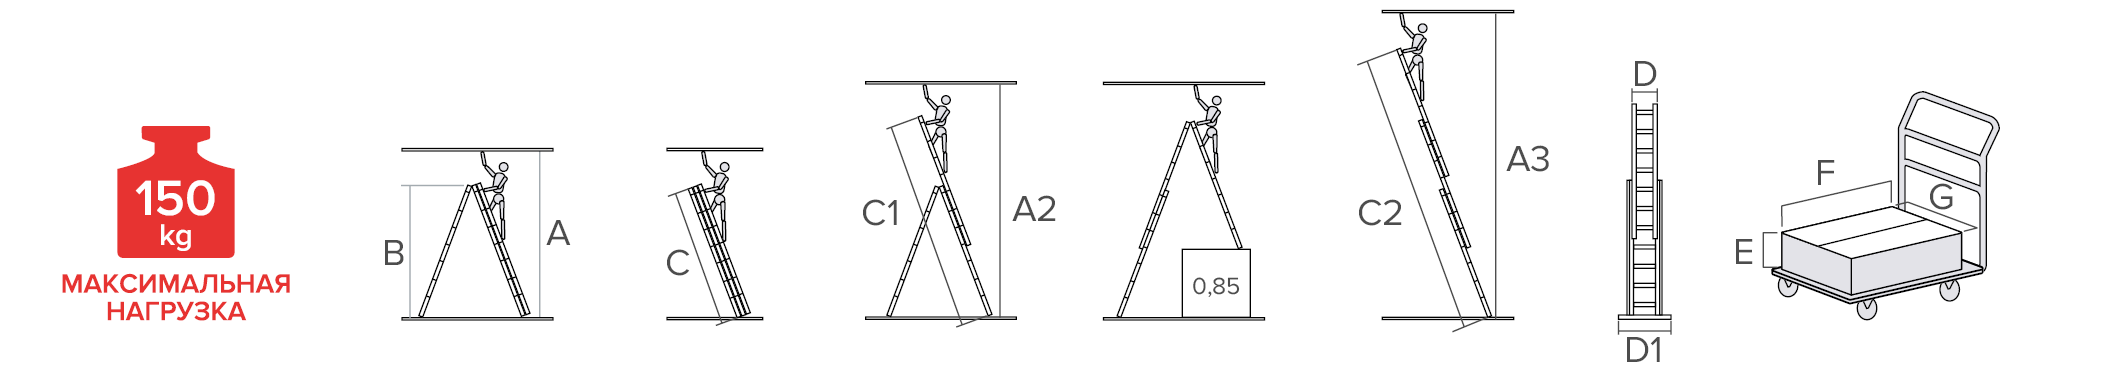 Schema: Three-section aluminum professional multipurpose ladder NV3230